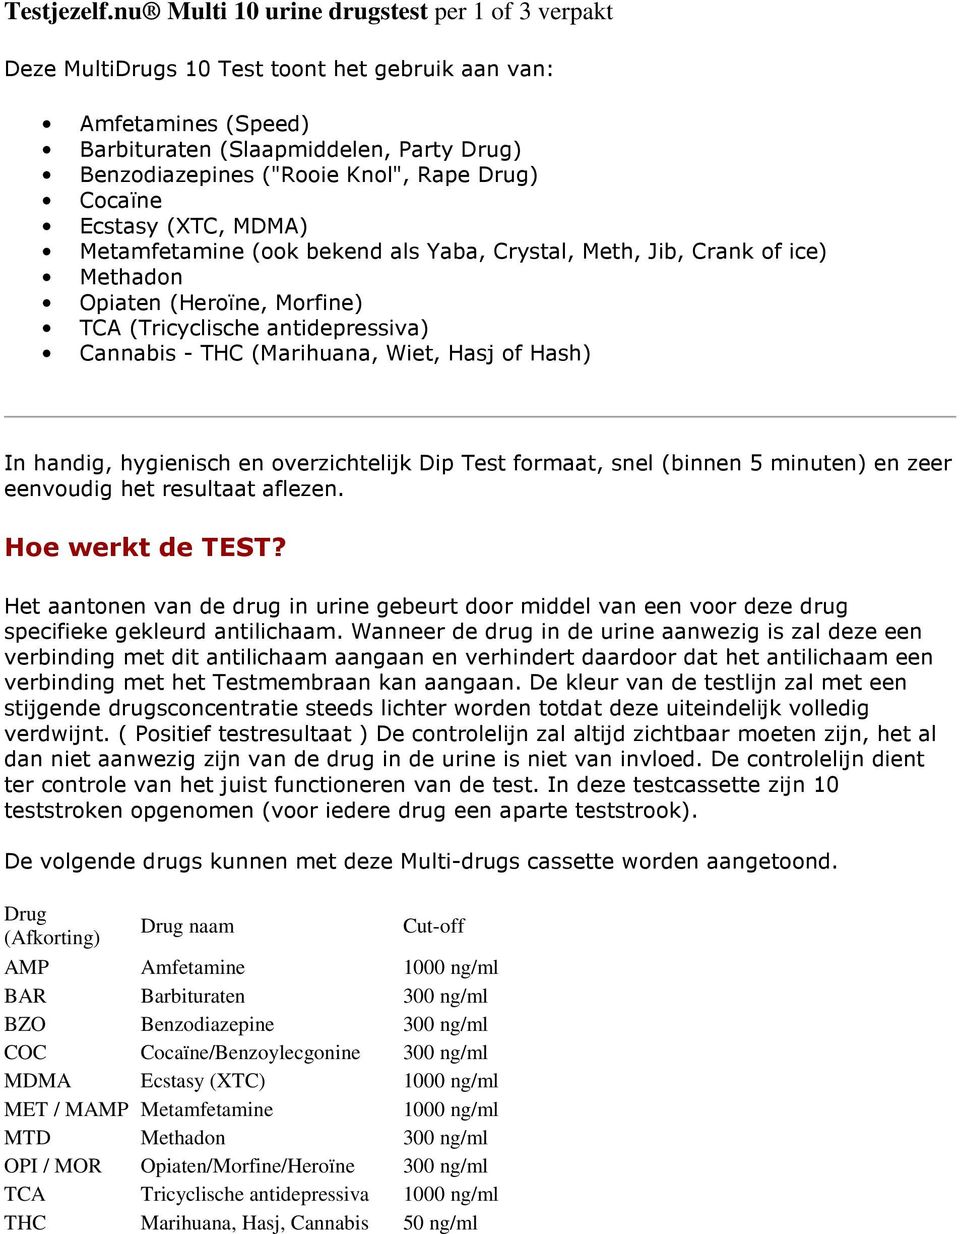 Drug) Cocaïne Ecstasy (XTC, MDMA) Metamfetamine (ook bekend als Yaba, Crystal, Meth, Jib, Crank of ice) Methadon Opiaten (Heroïne, Morfine) TCA (Tricyclische antidepressiva) Cannabis - THC